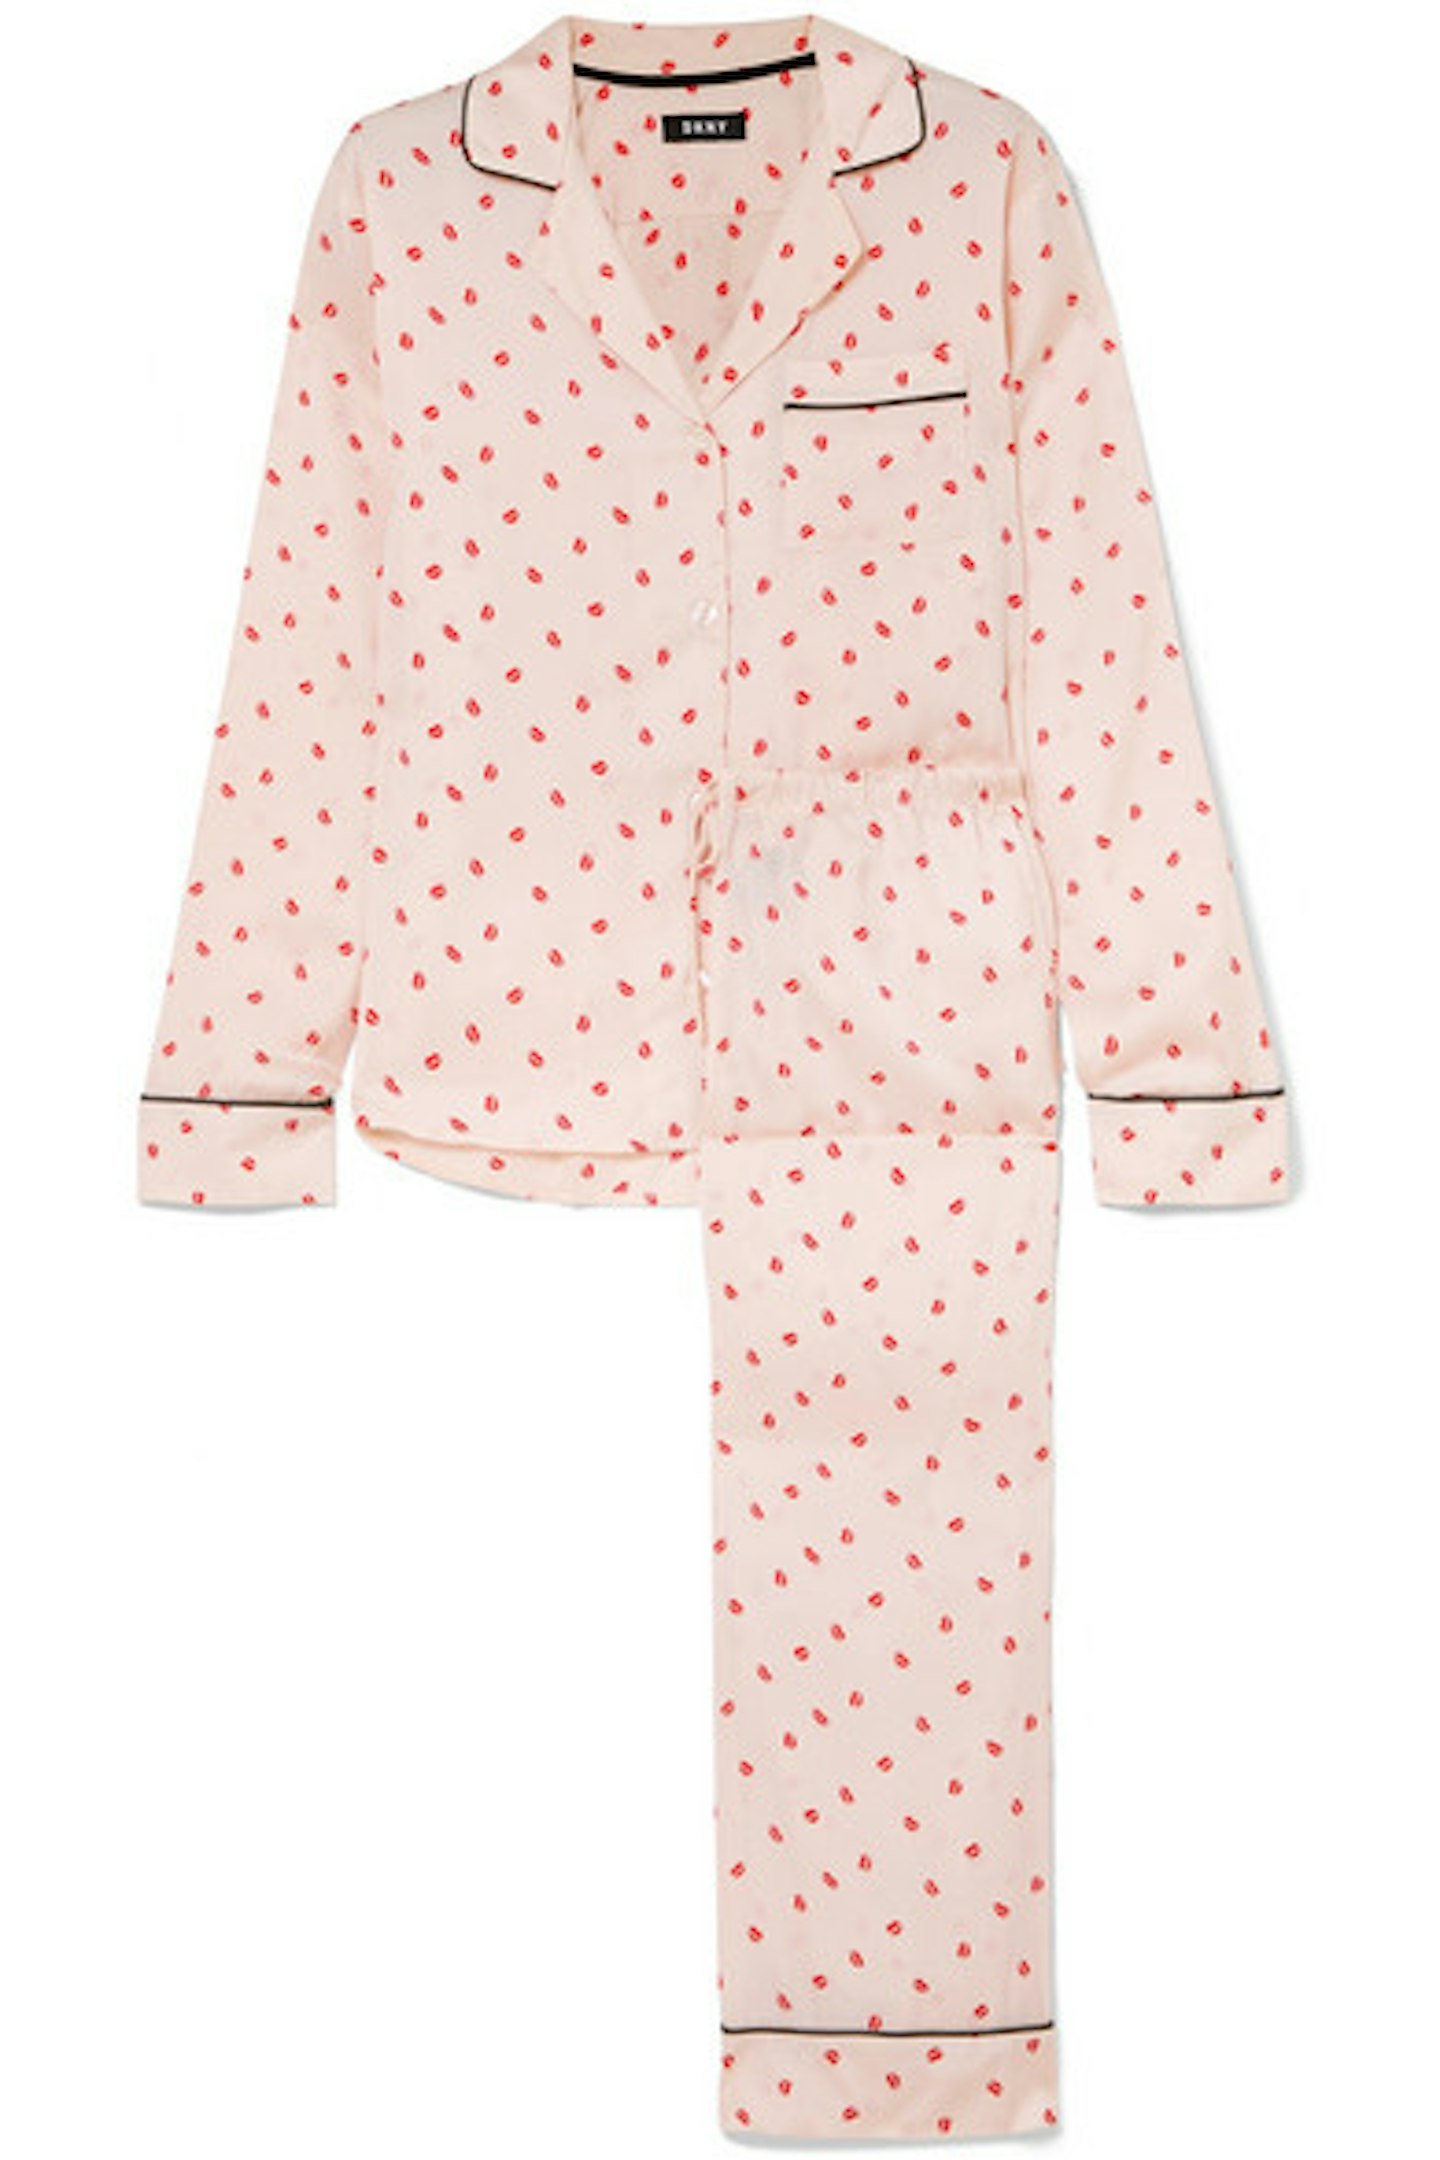 DKNY, Satin Pyjama Set, £56